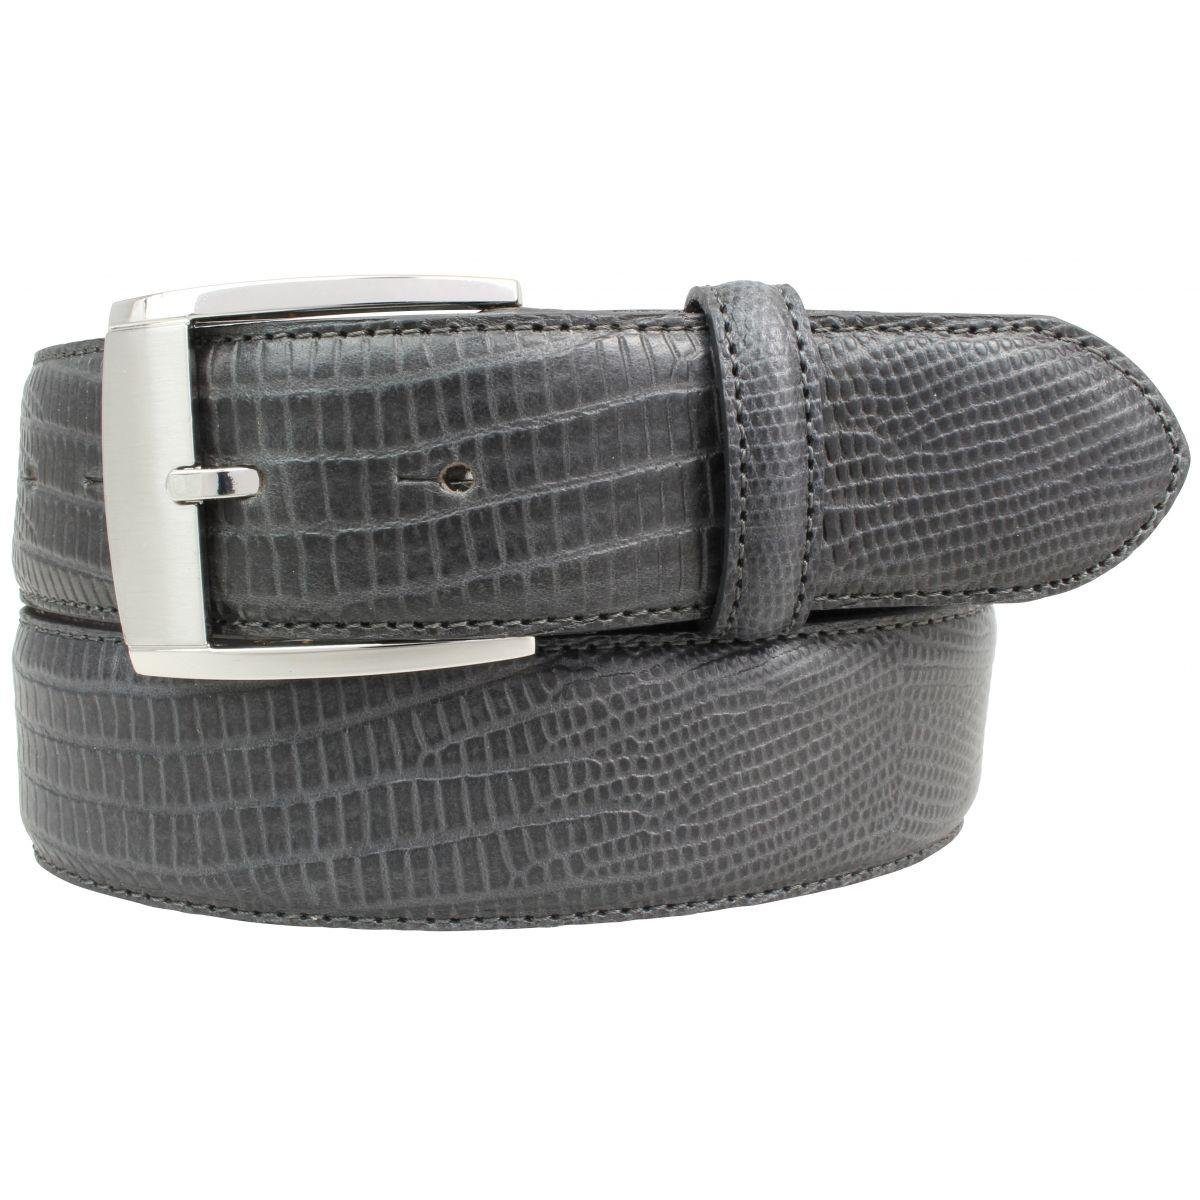 BELTINGER Ledergürtel Gürtel mit Echsenprägung 4 cm - Jeans-Gürtel für Damen Herren 40mm Rep Dunkelgrau, Silber